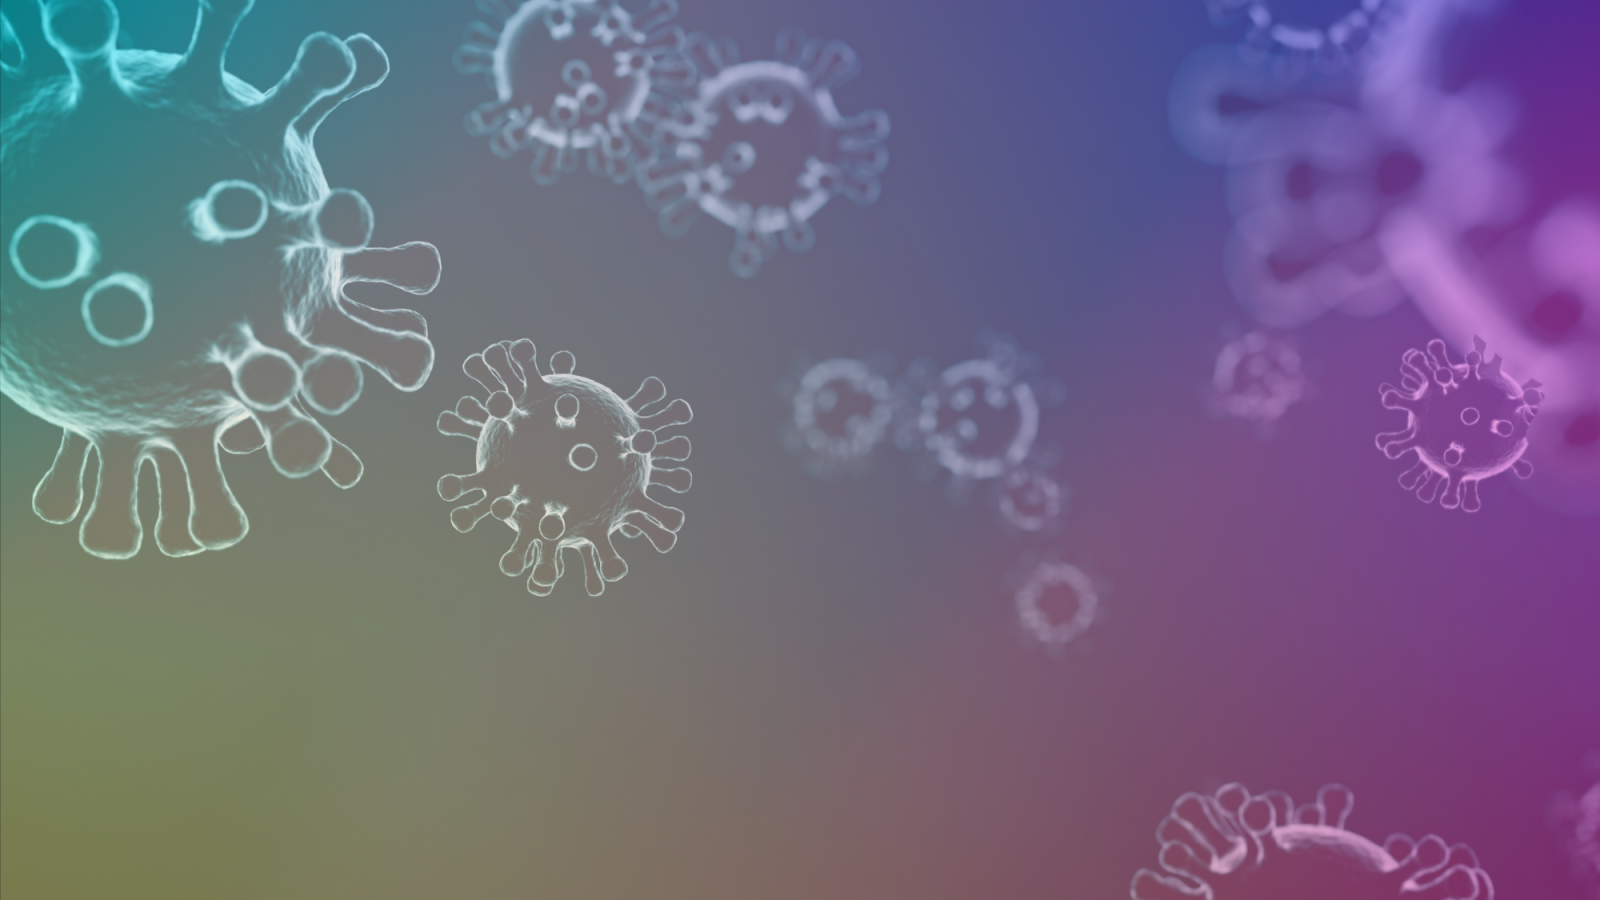 Artistic illustration of cellular shapes with a pastel color palette